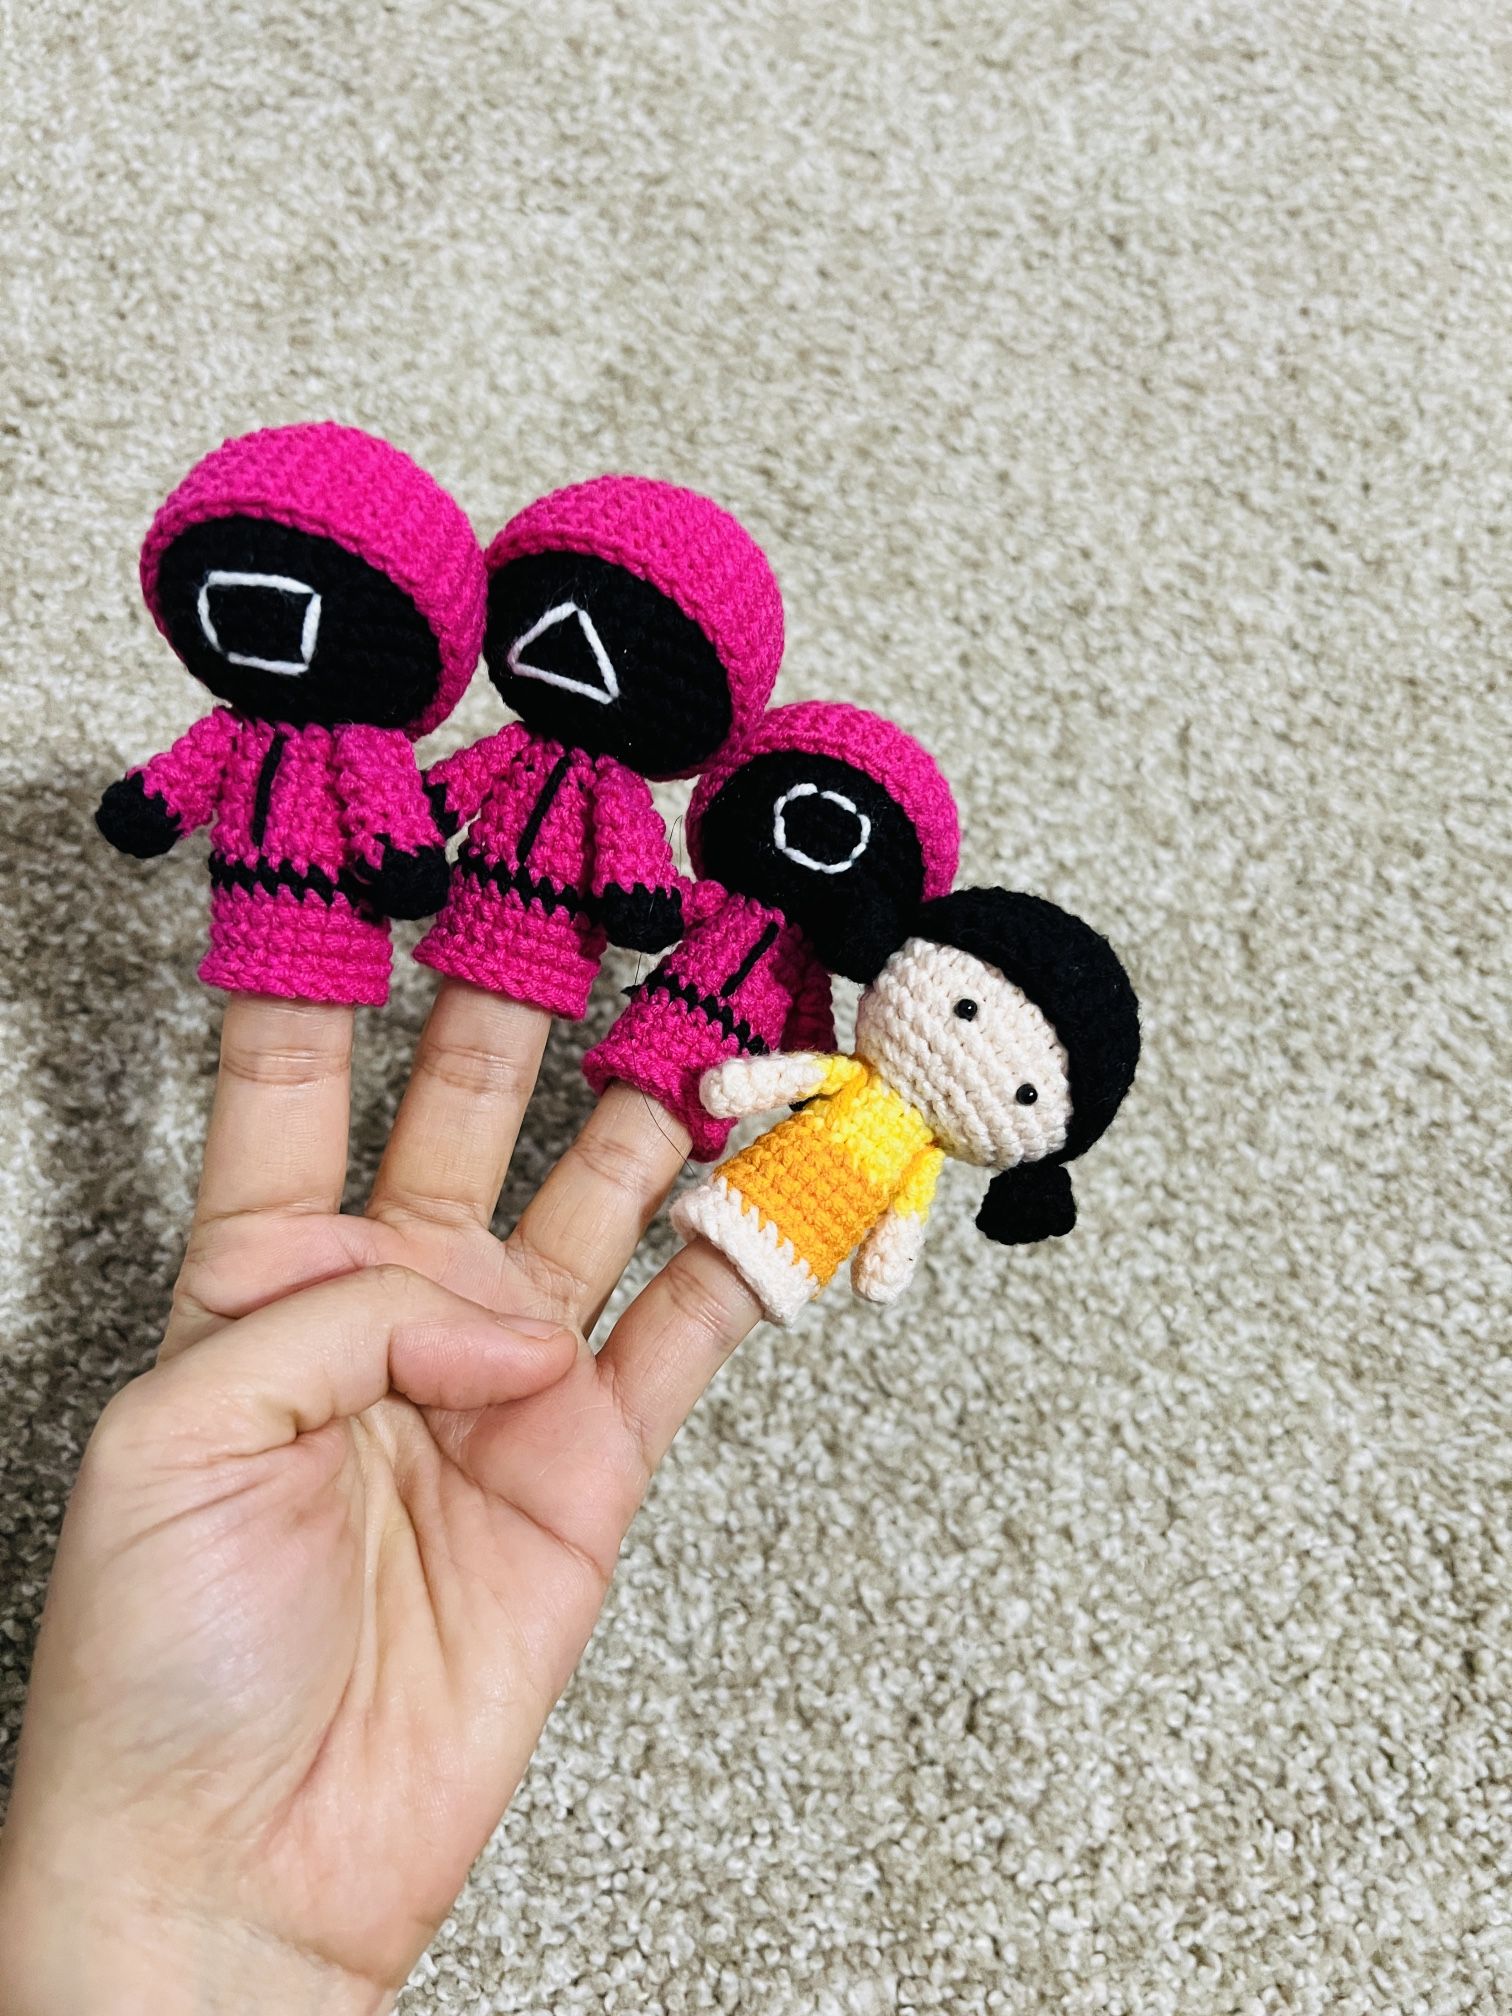 Set 4 Finger Puppets | Crochet Amigurumi | Squid Game